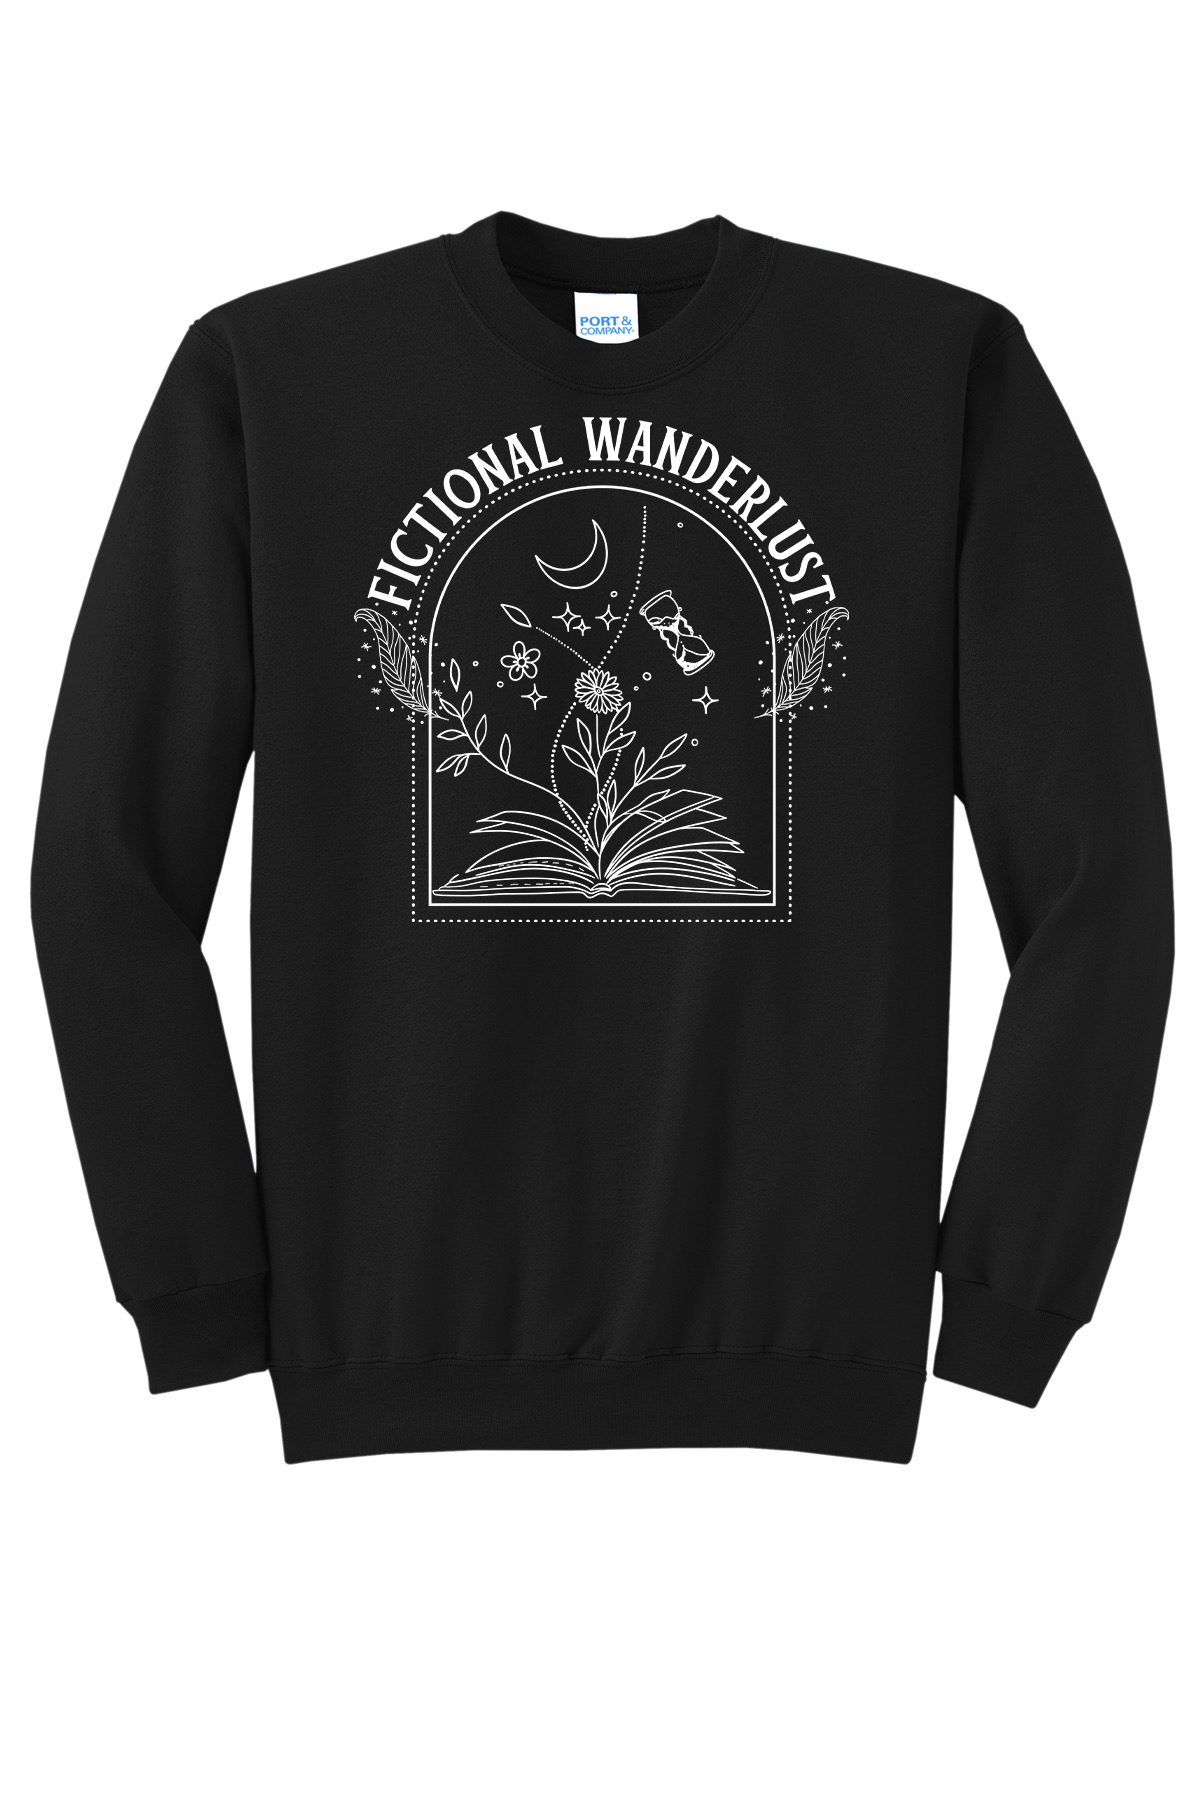 "Fictional Wanderlust" Crewneck Sweater